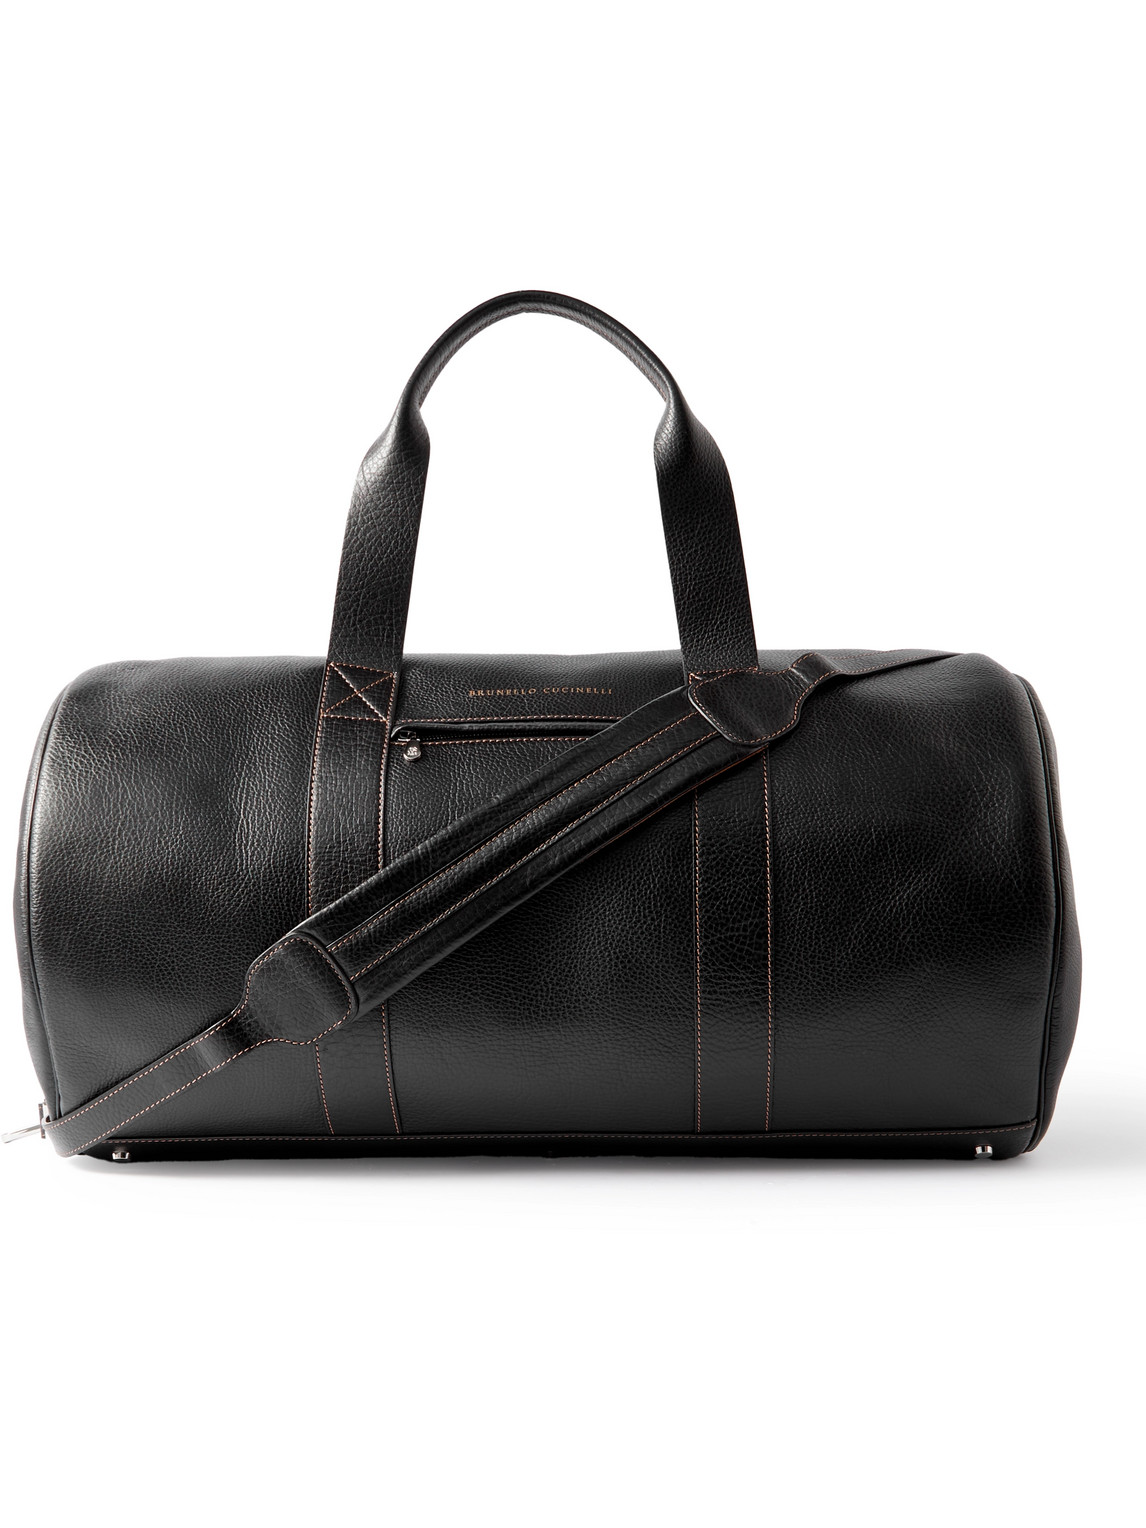 Brunello Cucinelli - Borsa Leather Duffle Bag - Men - Black von Brunello Cucinelli